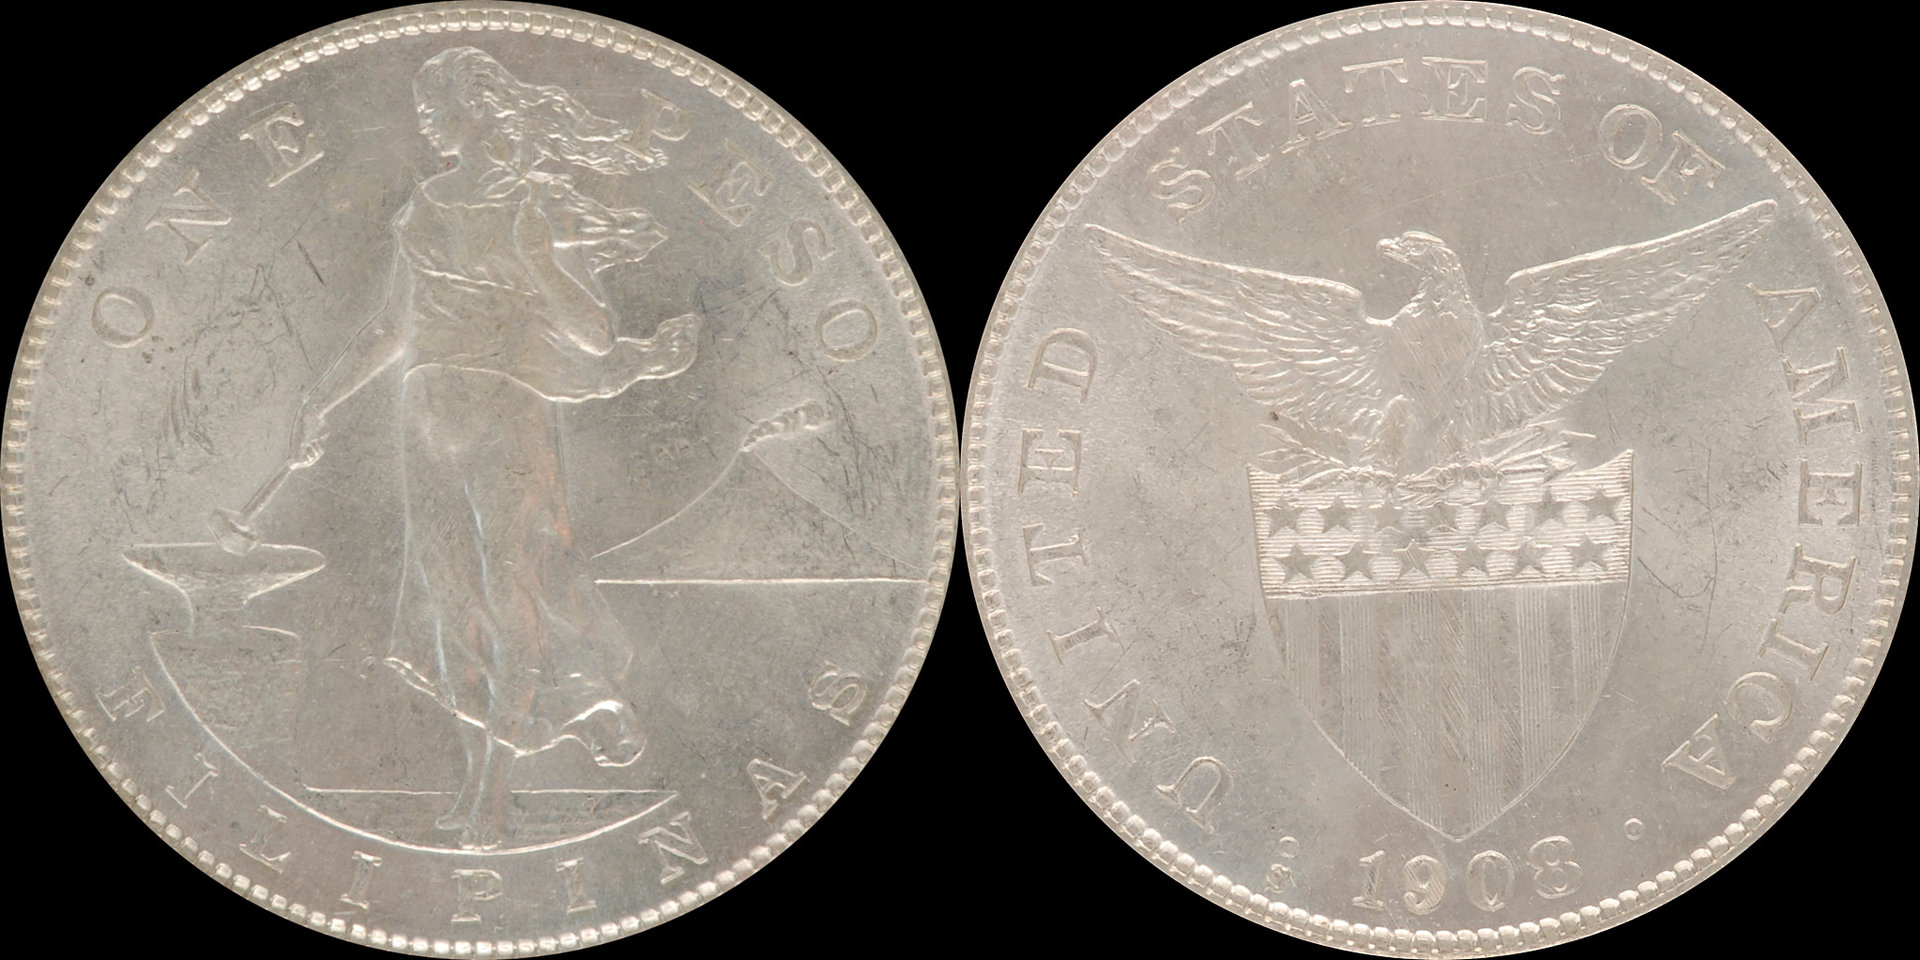 1908s-Peso.jpg